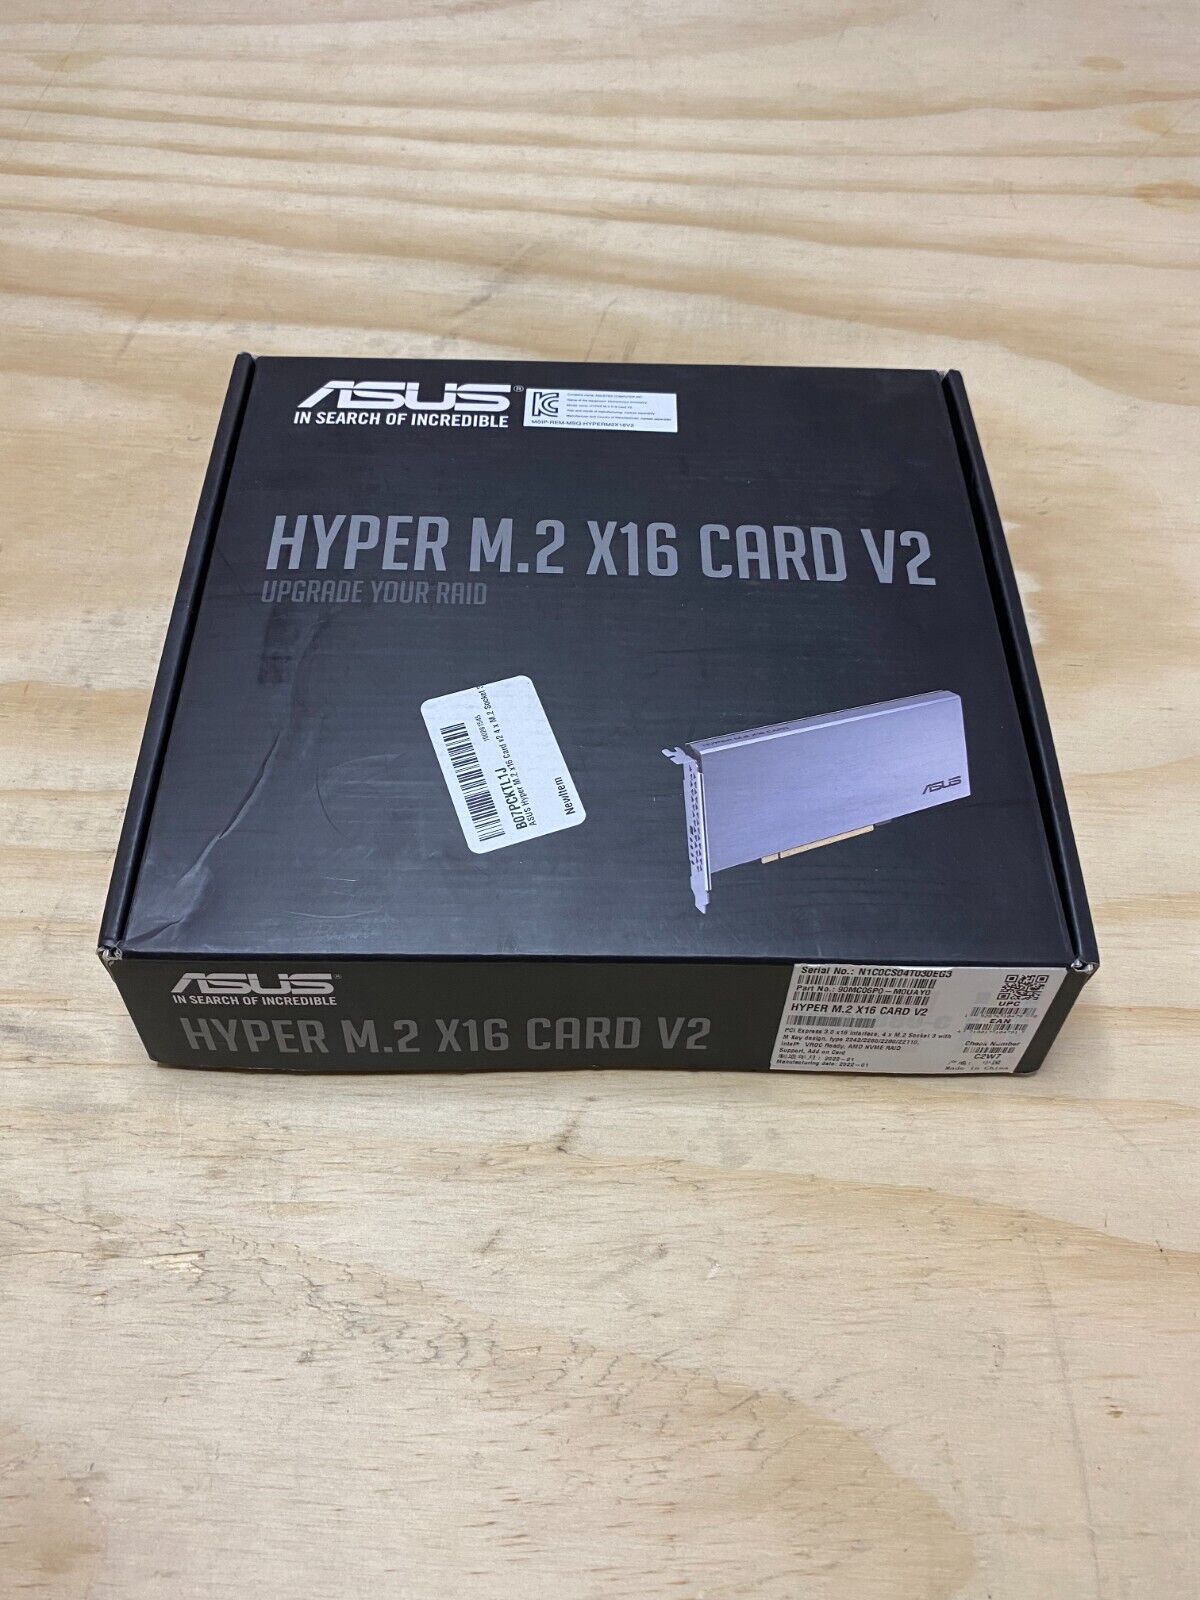 ASUS Hyper M.2 X16 RAID Card PCIE-GEN 3 v2 Expansion Card 